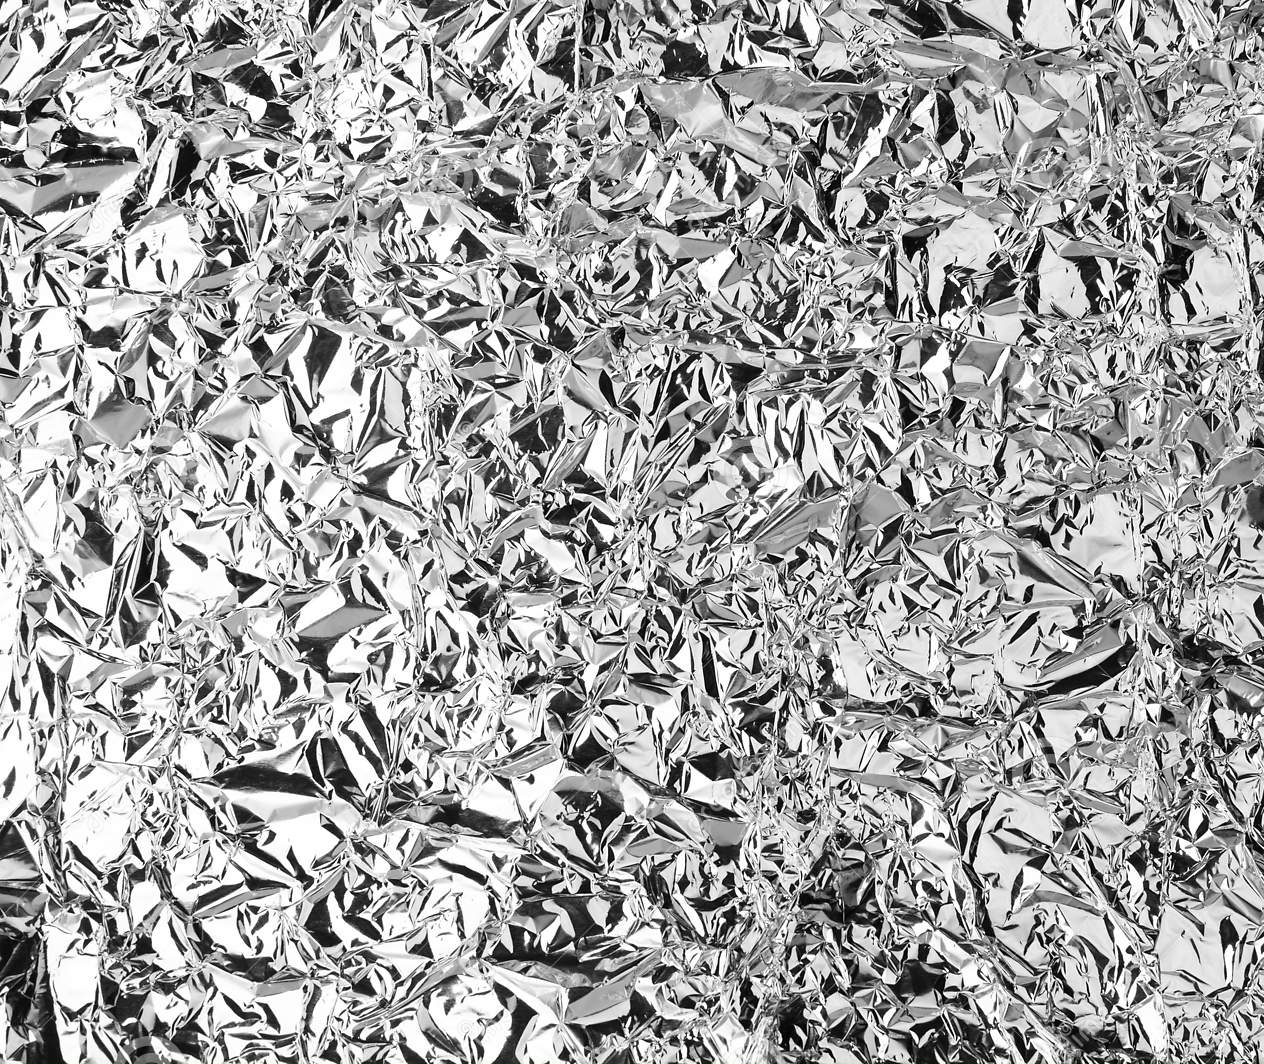 crumpled-silver-foil-shining-texture-background-bright-shiny-festive-design-metallic-glitter-surface-holiday-decorative-backdrop-143773797  - University Art